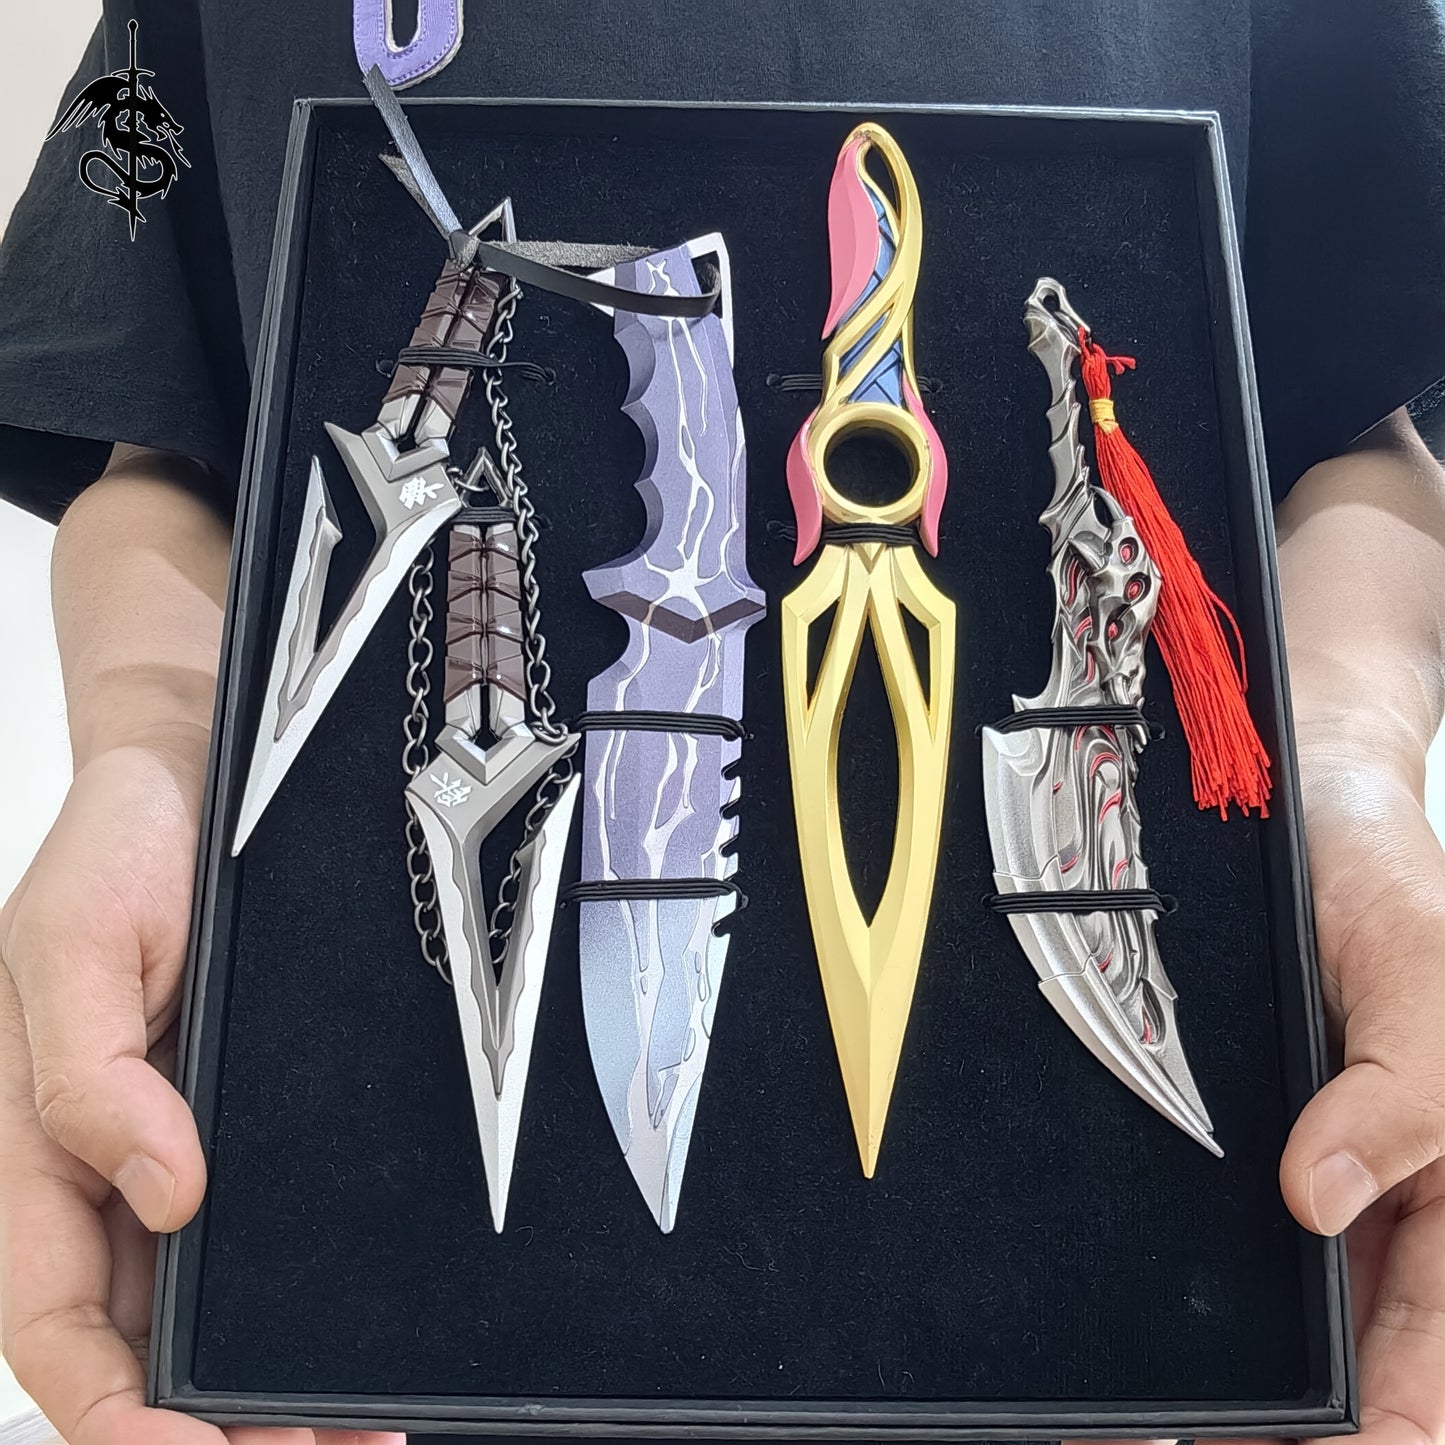 Kuronami no Yaiba Blades of Primordia Smite Knife Mystbloom Kunai 4 in 1 Box